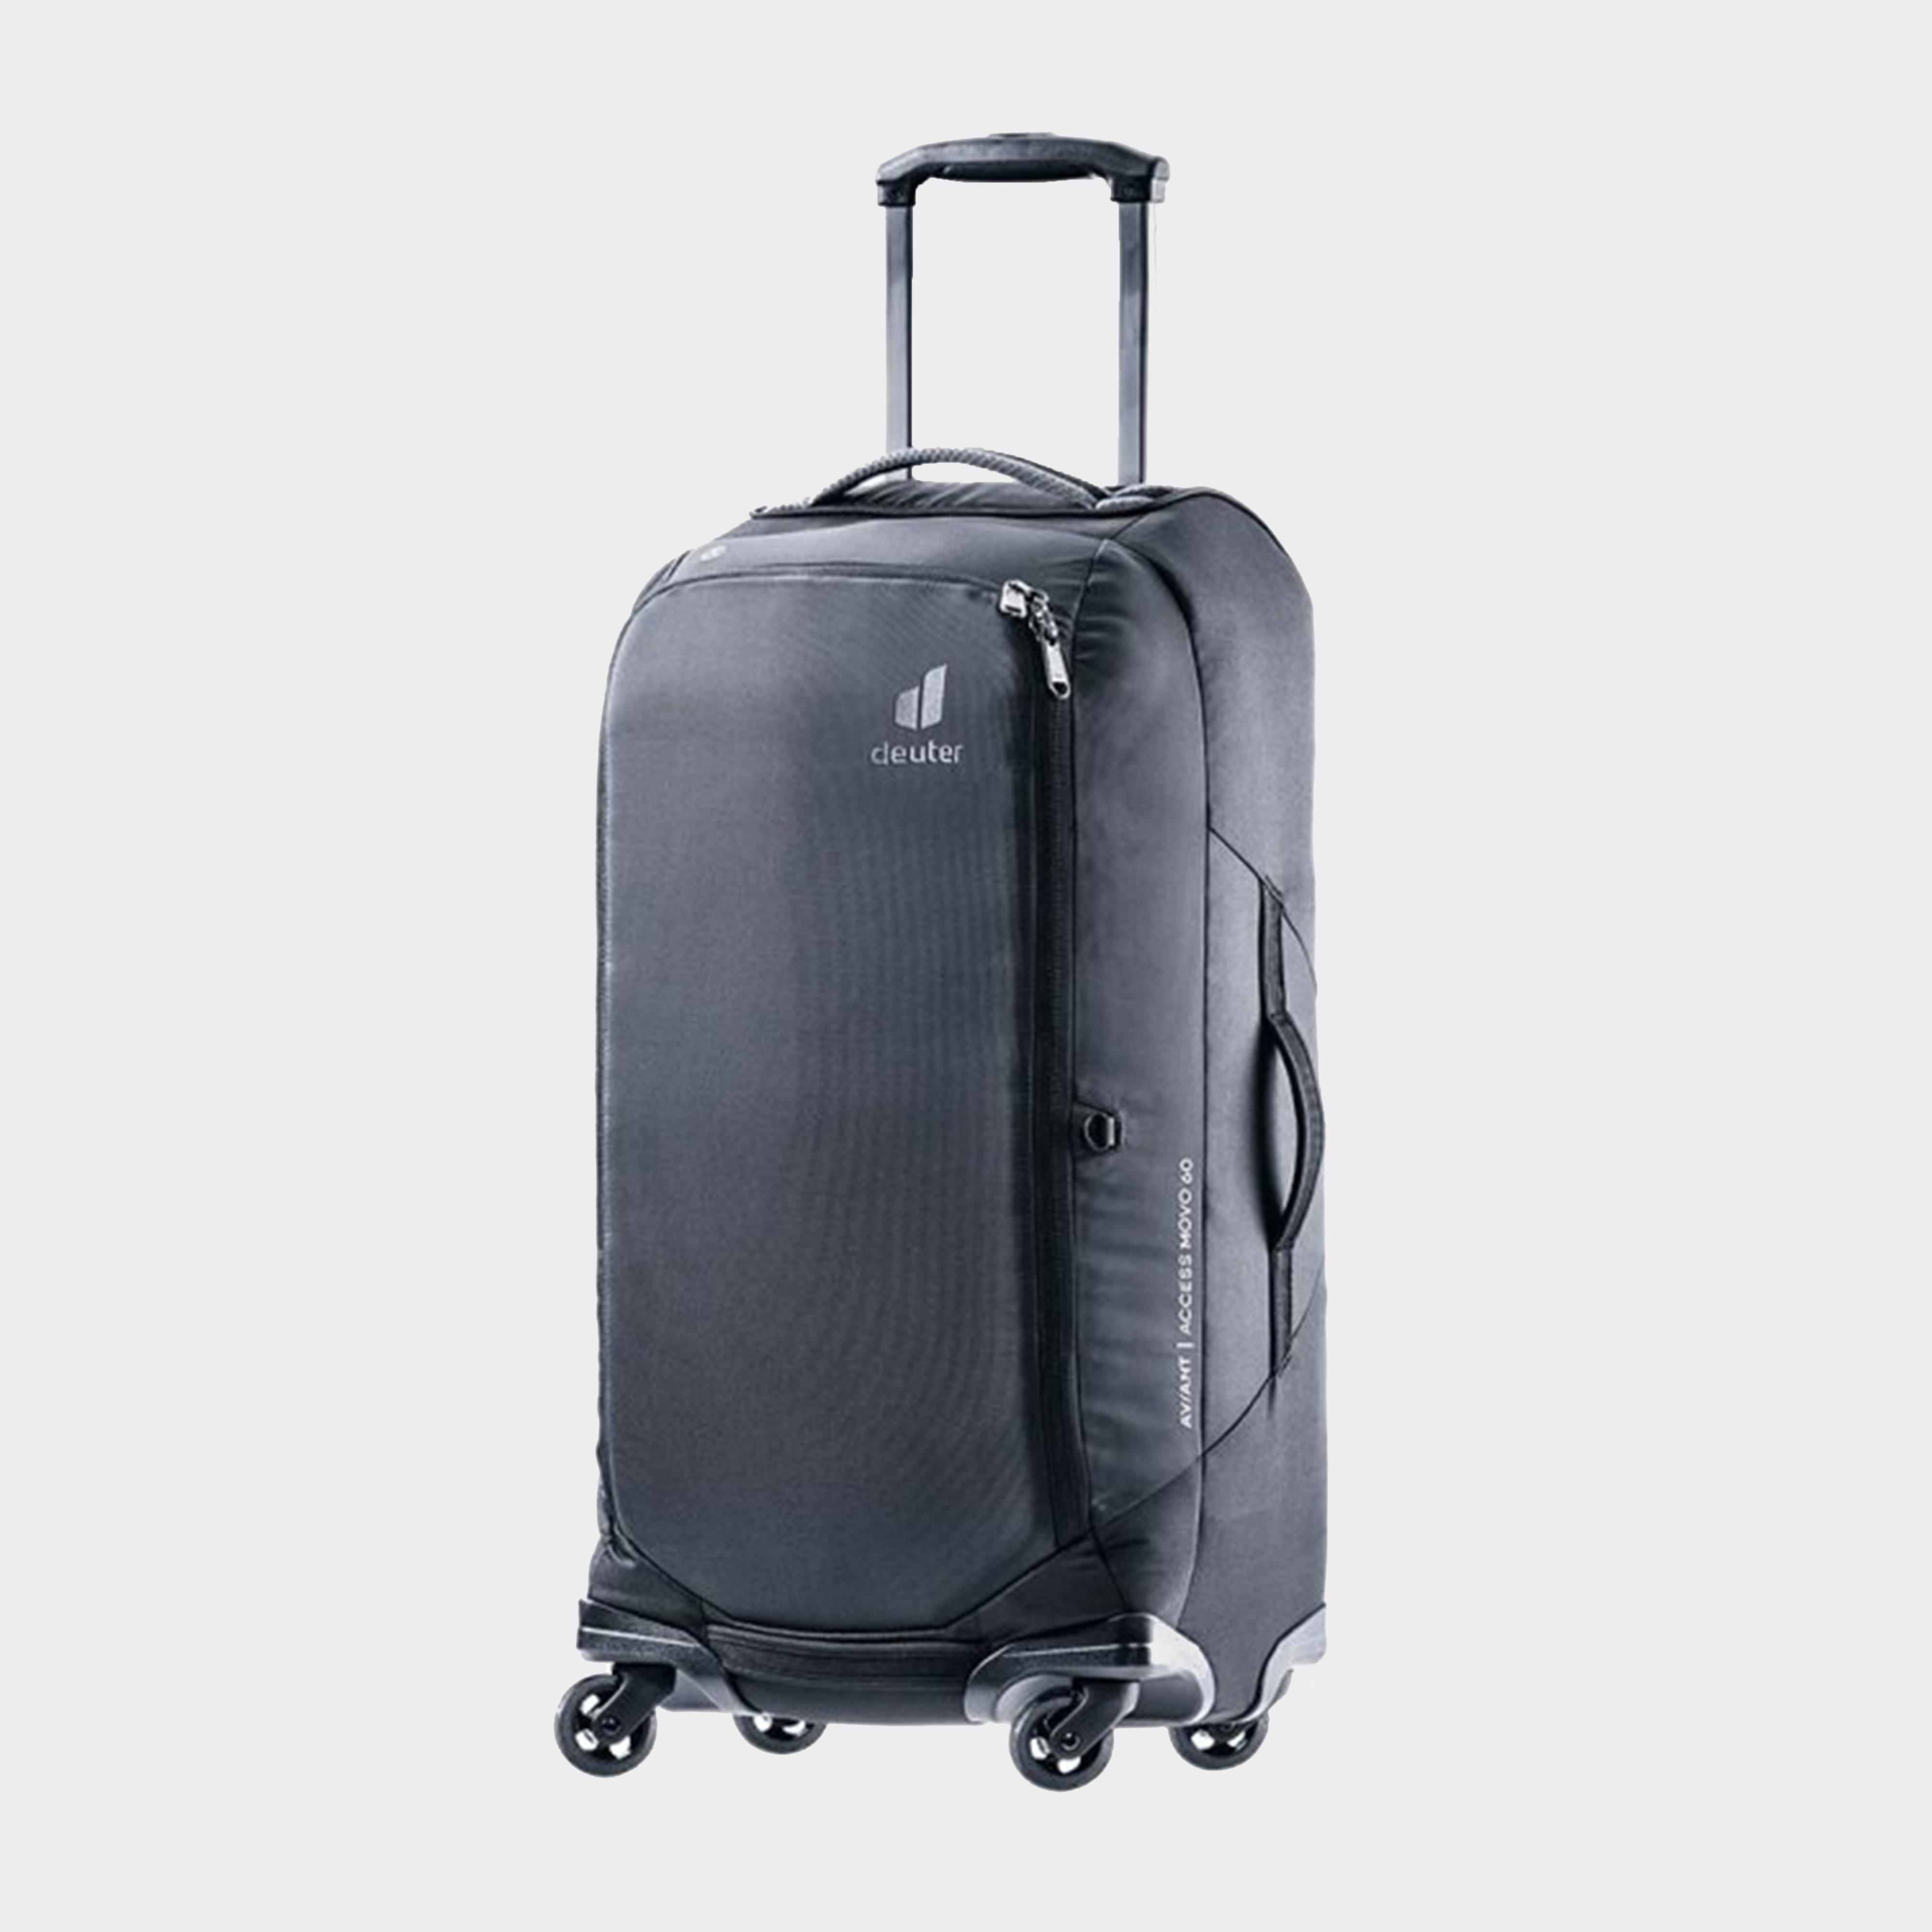 Deuter Aviant Access Movo 60 Wheeled Luggage - Black/black  Black/black